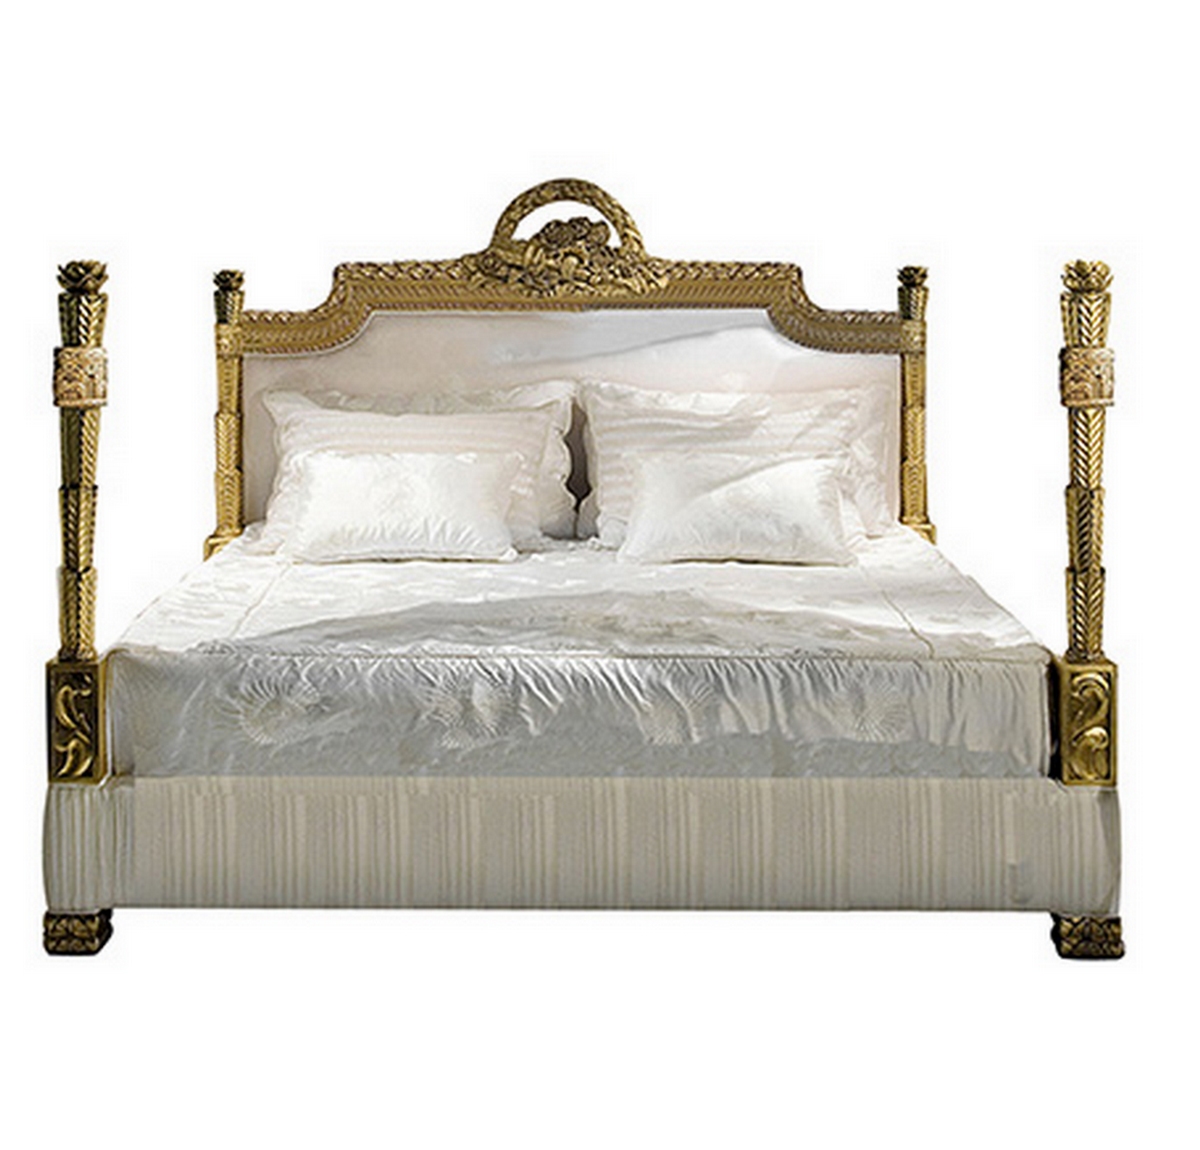 Baroque luxury bedside